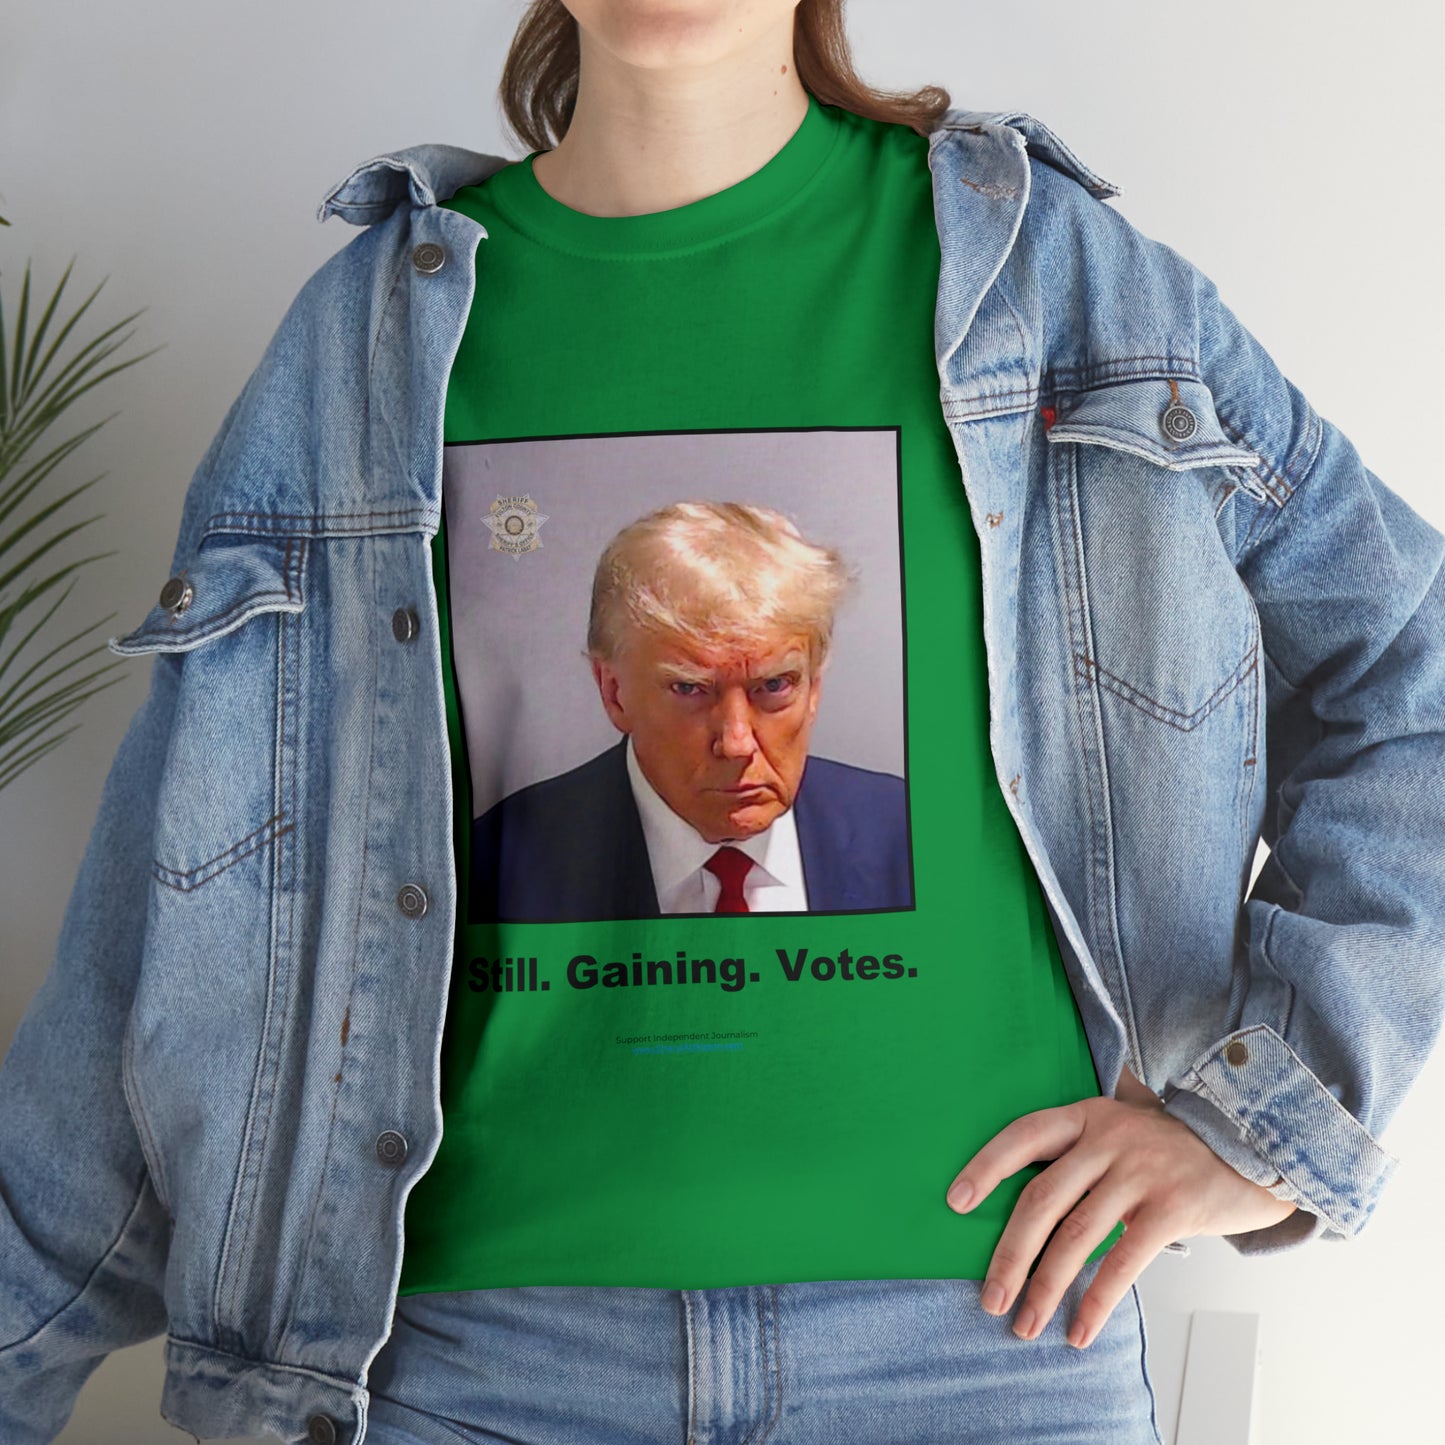 'Still. Gaining. Votes.' Trump Mugshot T-Shirt (10 colors)